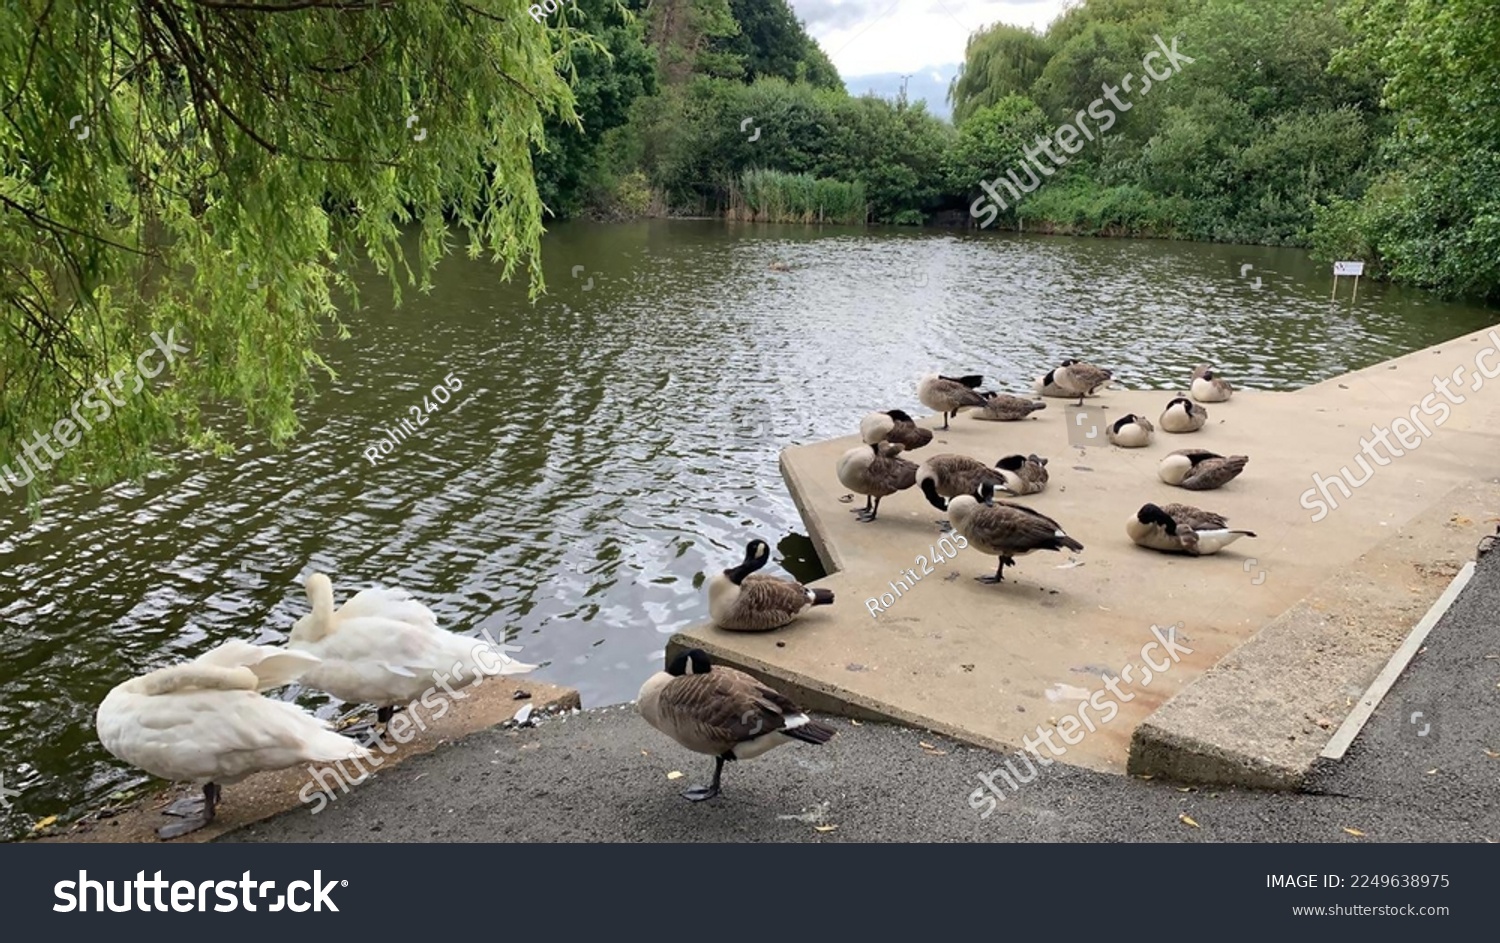 Various ducks enjoying near pond, London, UK, 24 Sep 2021 #2249638975